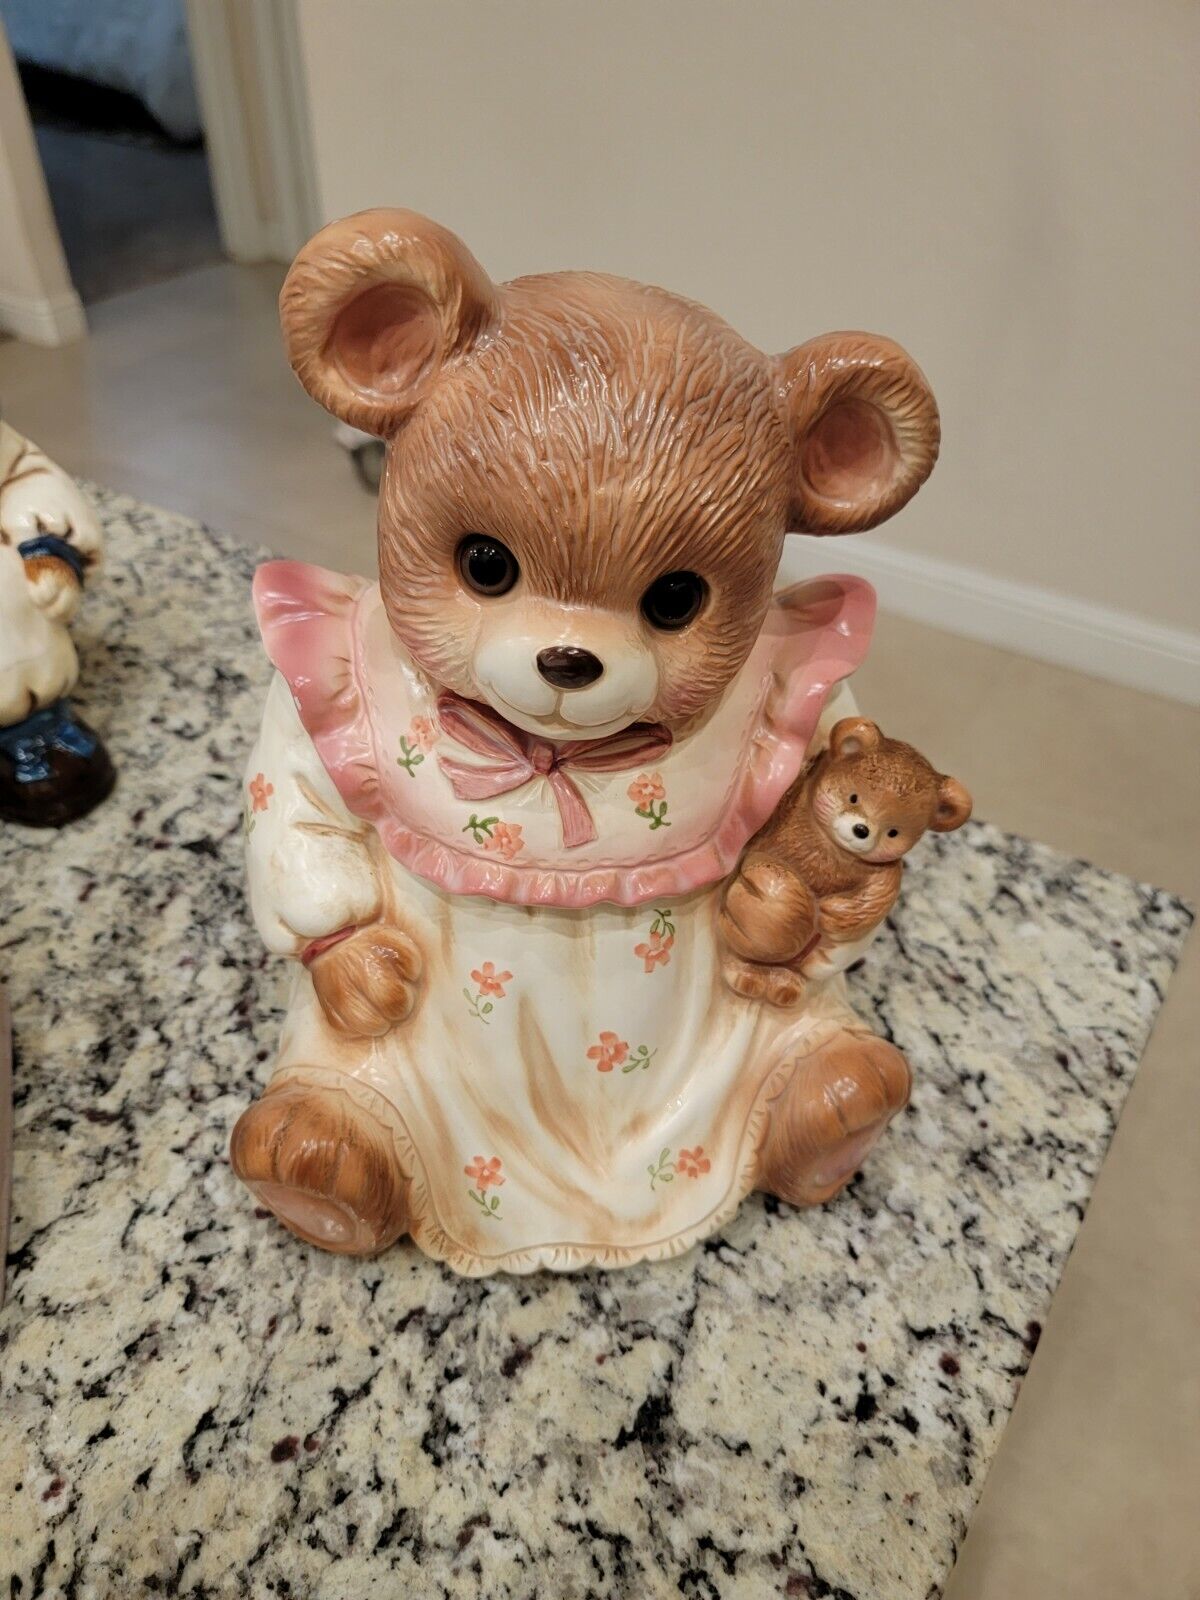  Adorable Teddy Bear Wearing Nightgown with Glass Eyes Cookie Jar Vintage Japan 